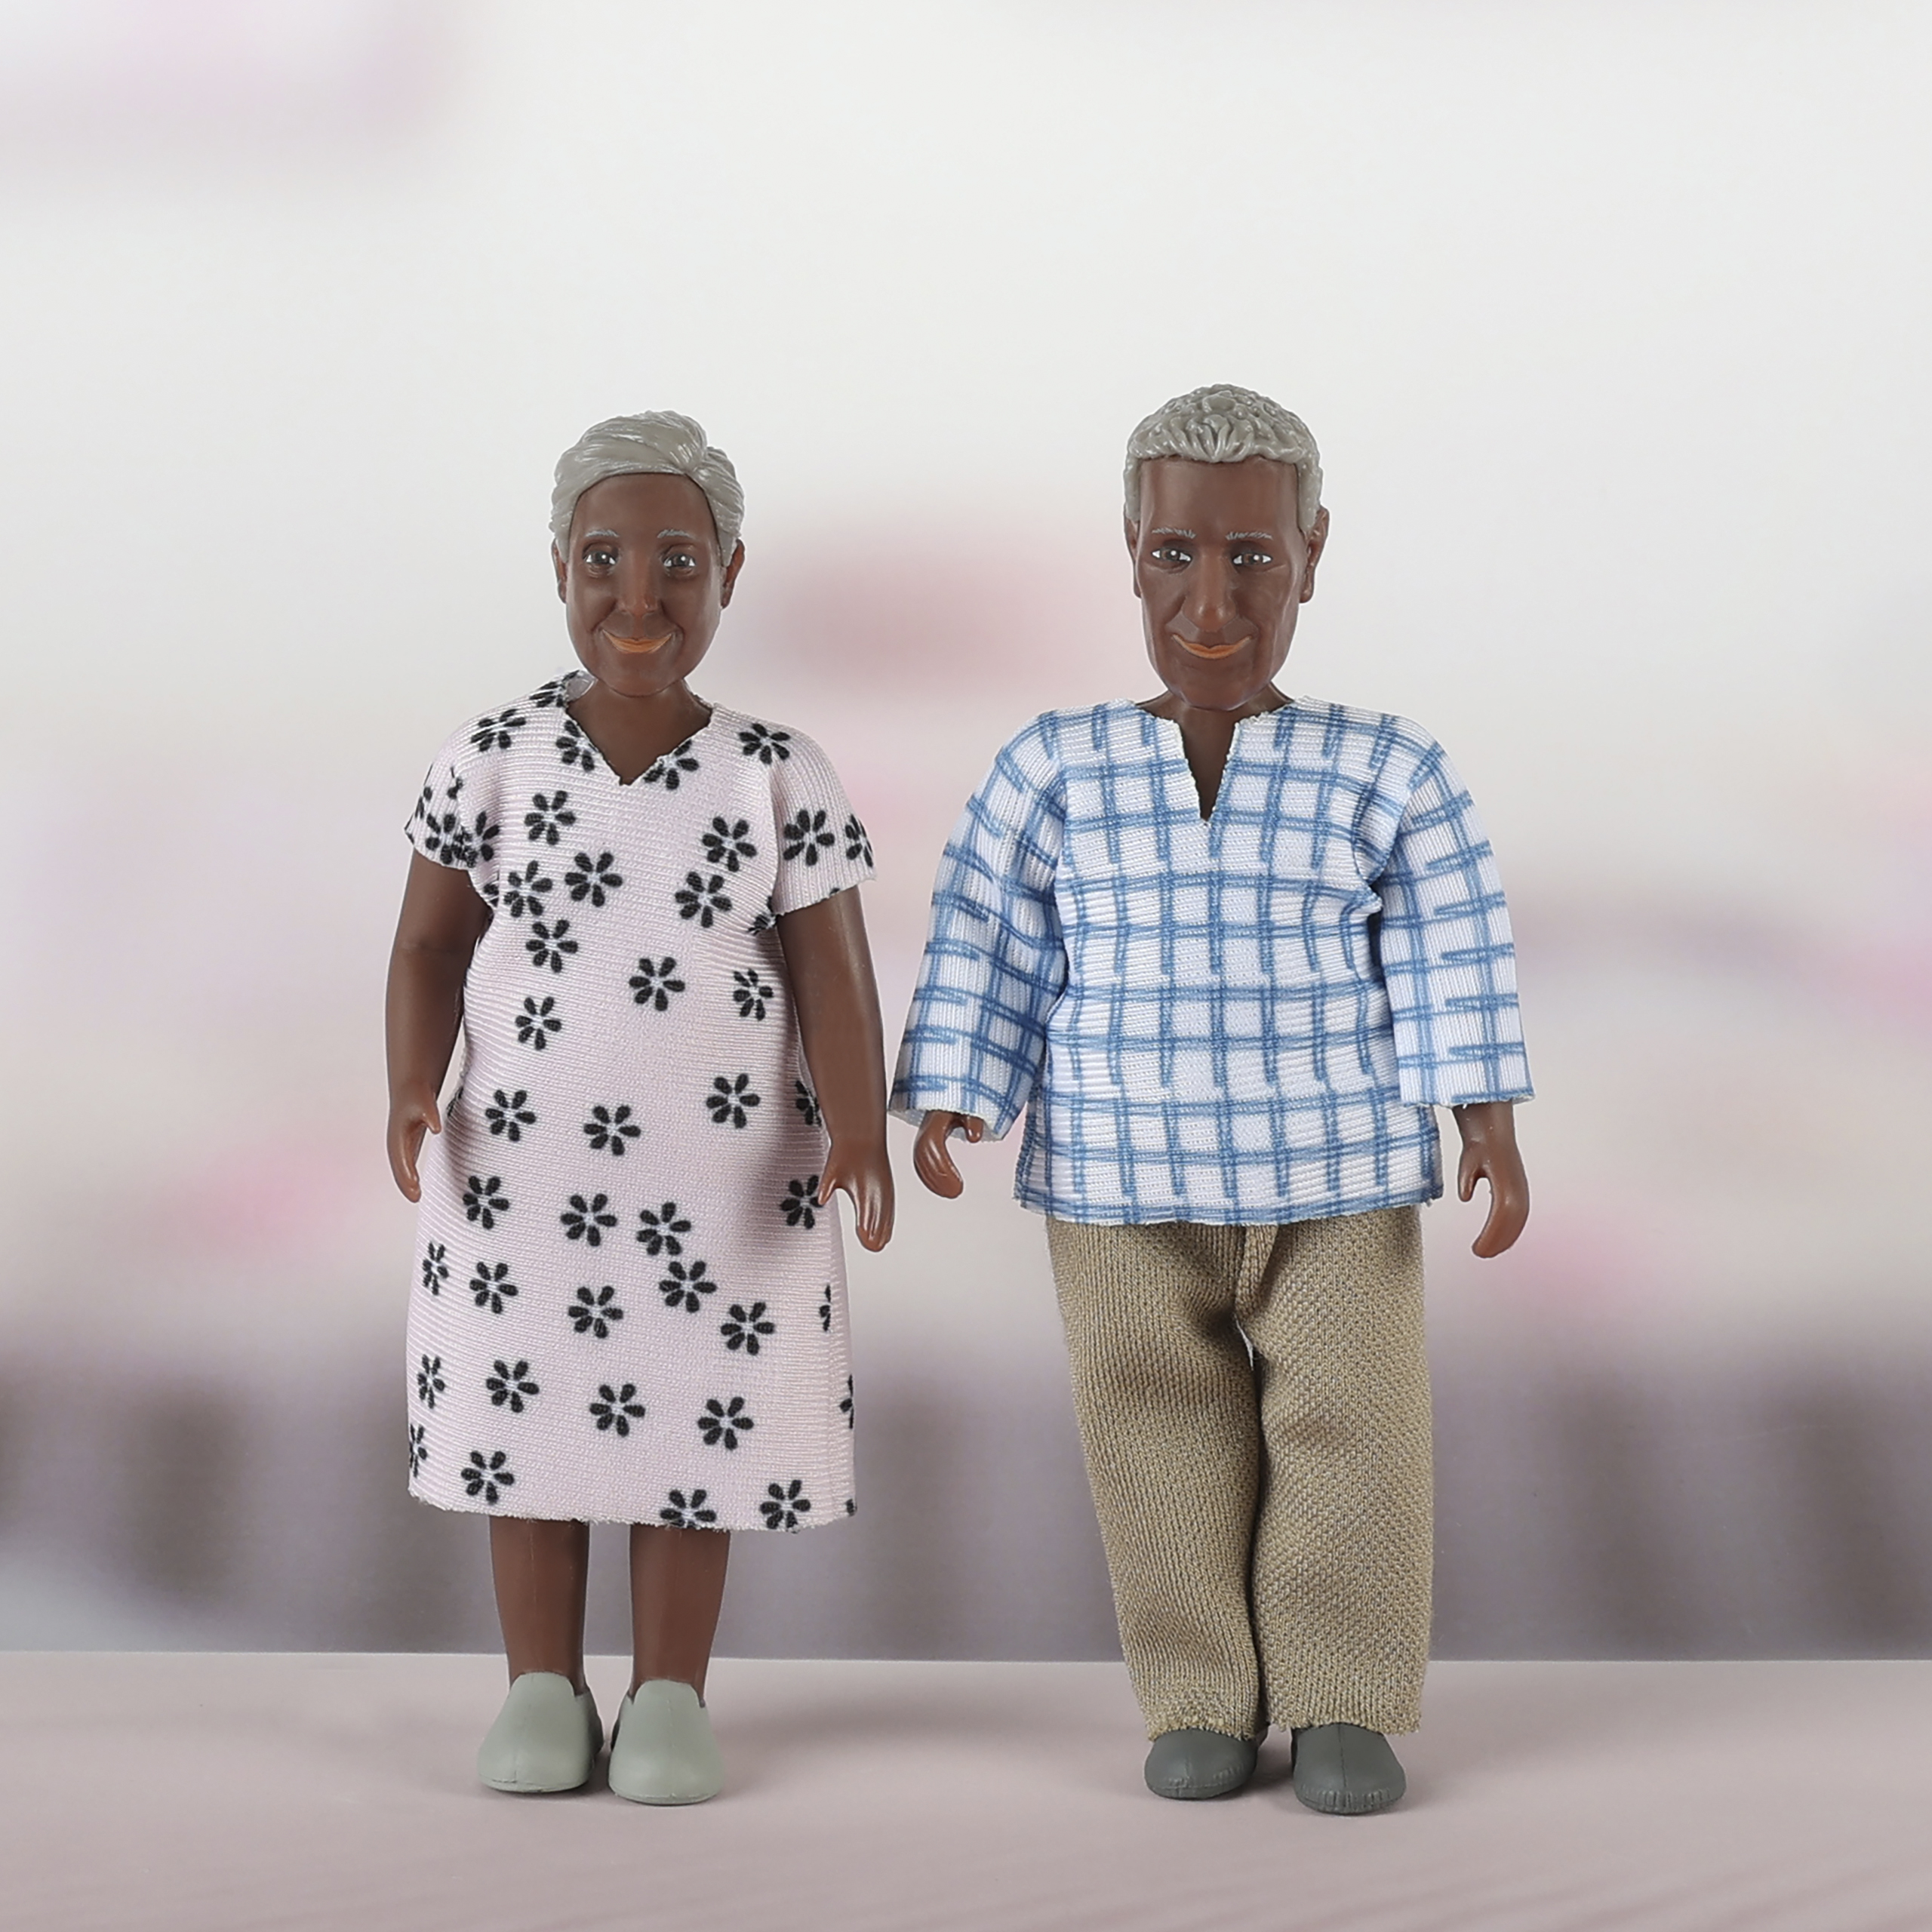 Dark-skinned dolls lundby	dollshouse dolls elderly couple billie